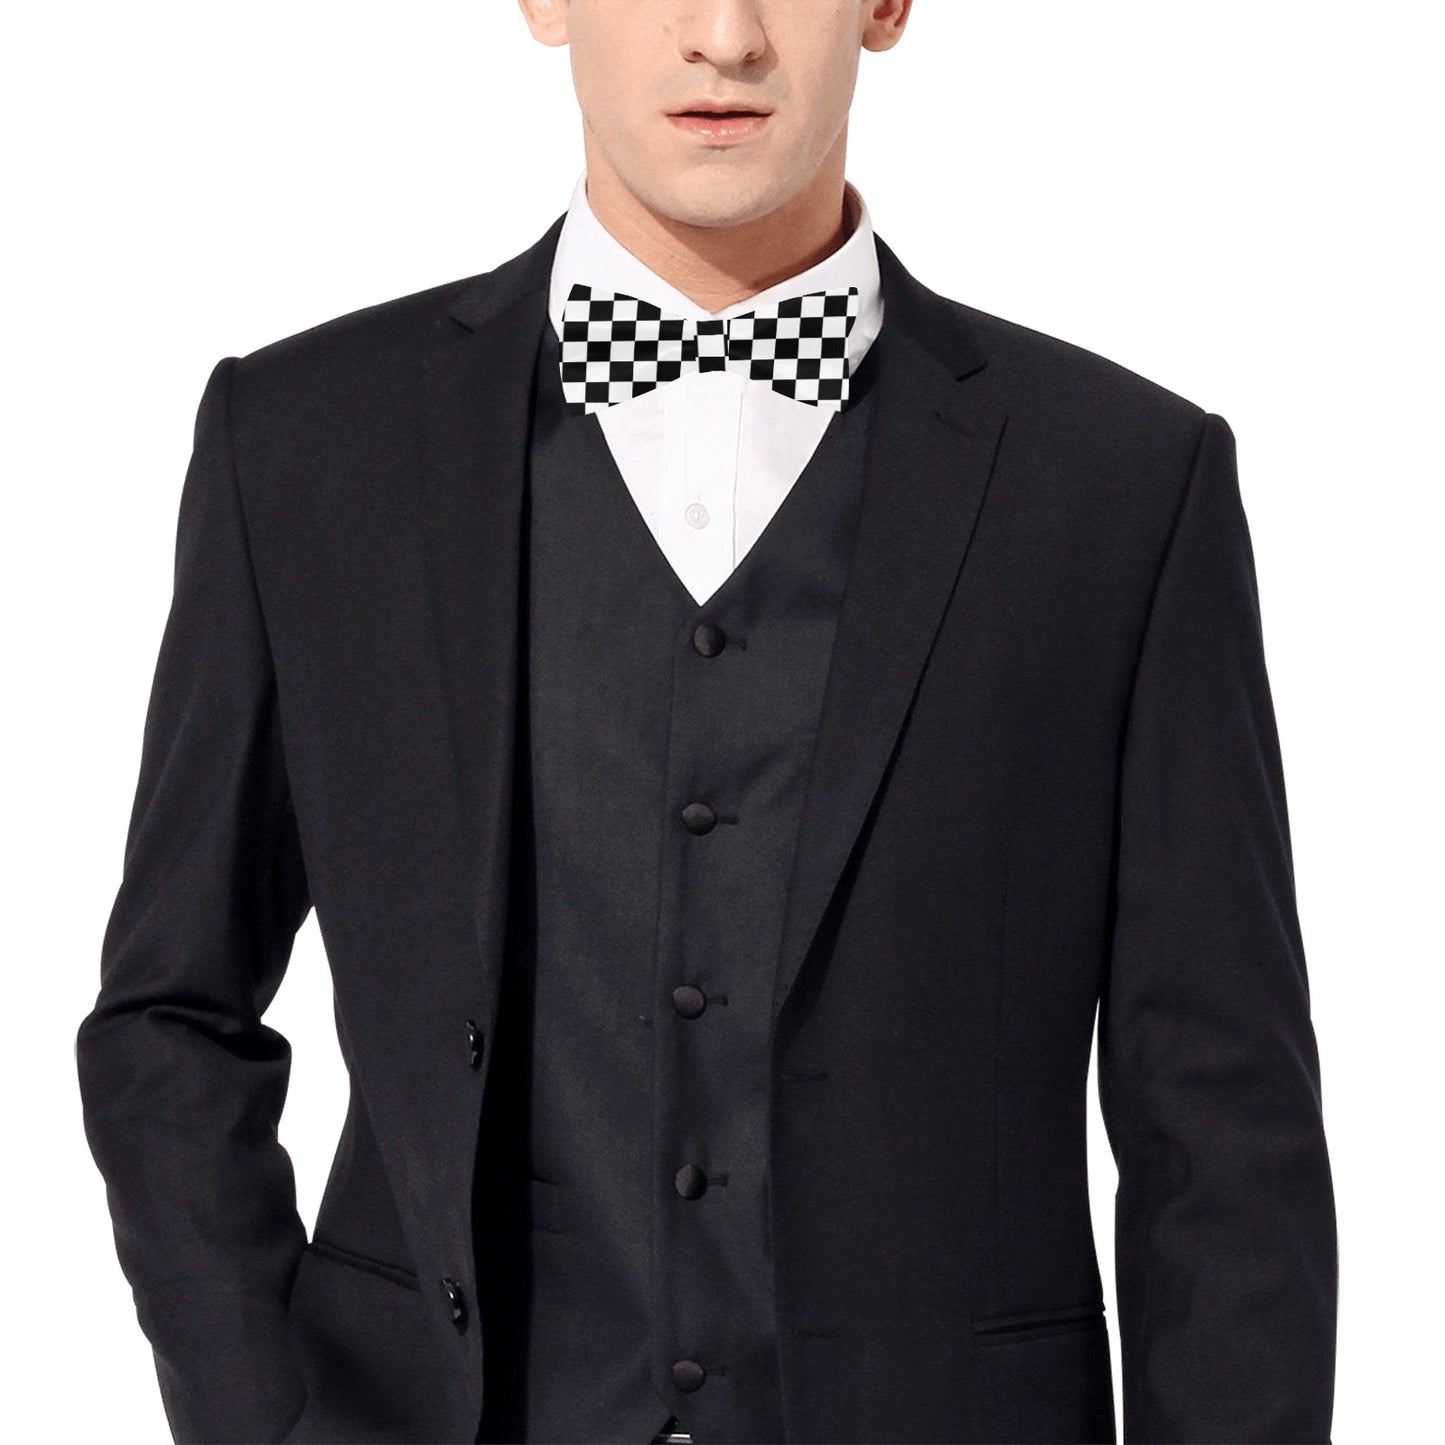 Checkered Bow Tie, Black White Check Classic Chic Adjustable Pre Tied Bowtie Gift for Him Men Tuxedo Groomsmen Necktie Wedding Starcove Fashion